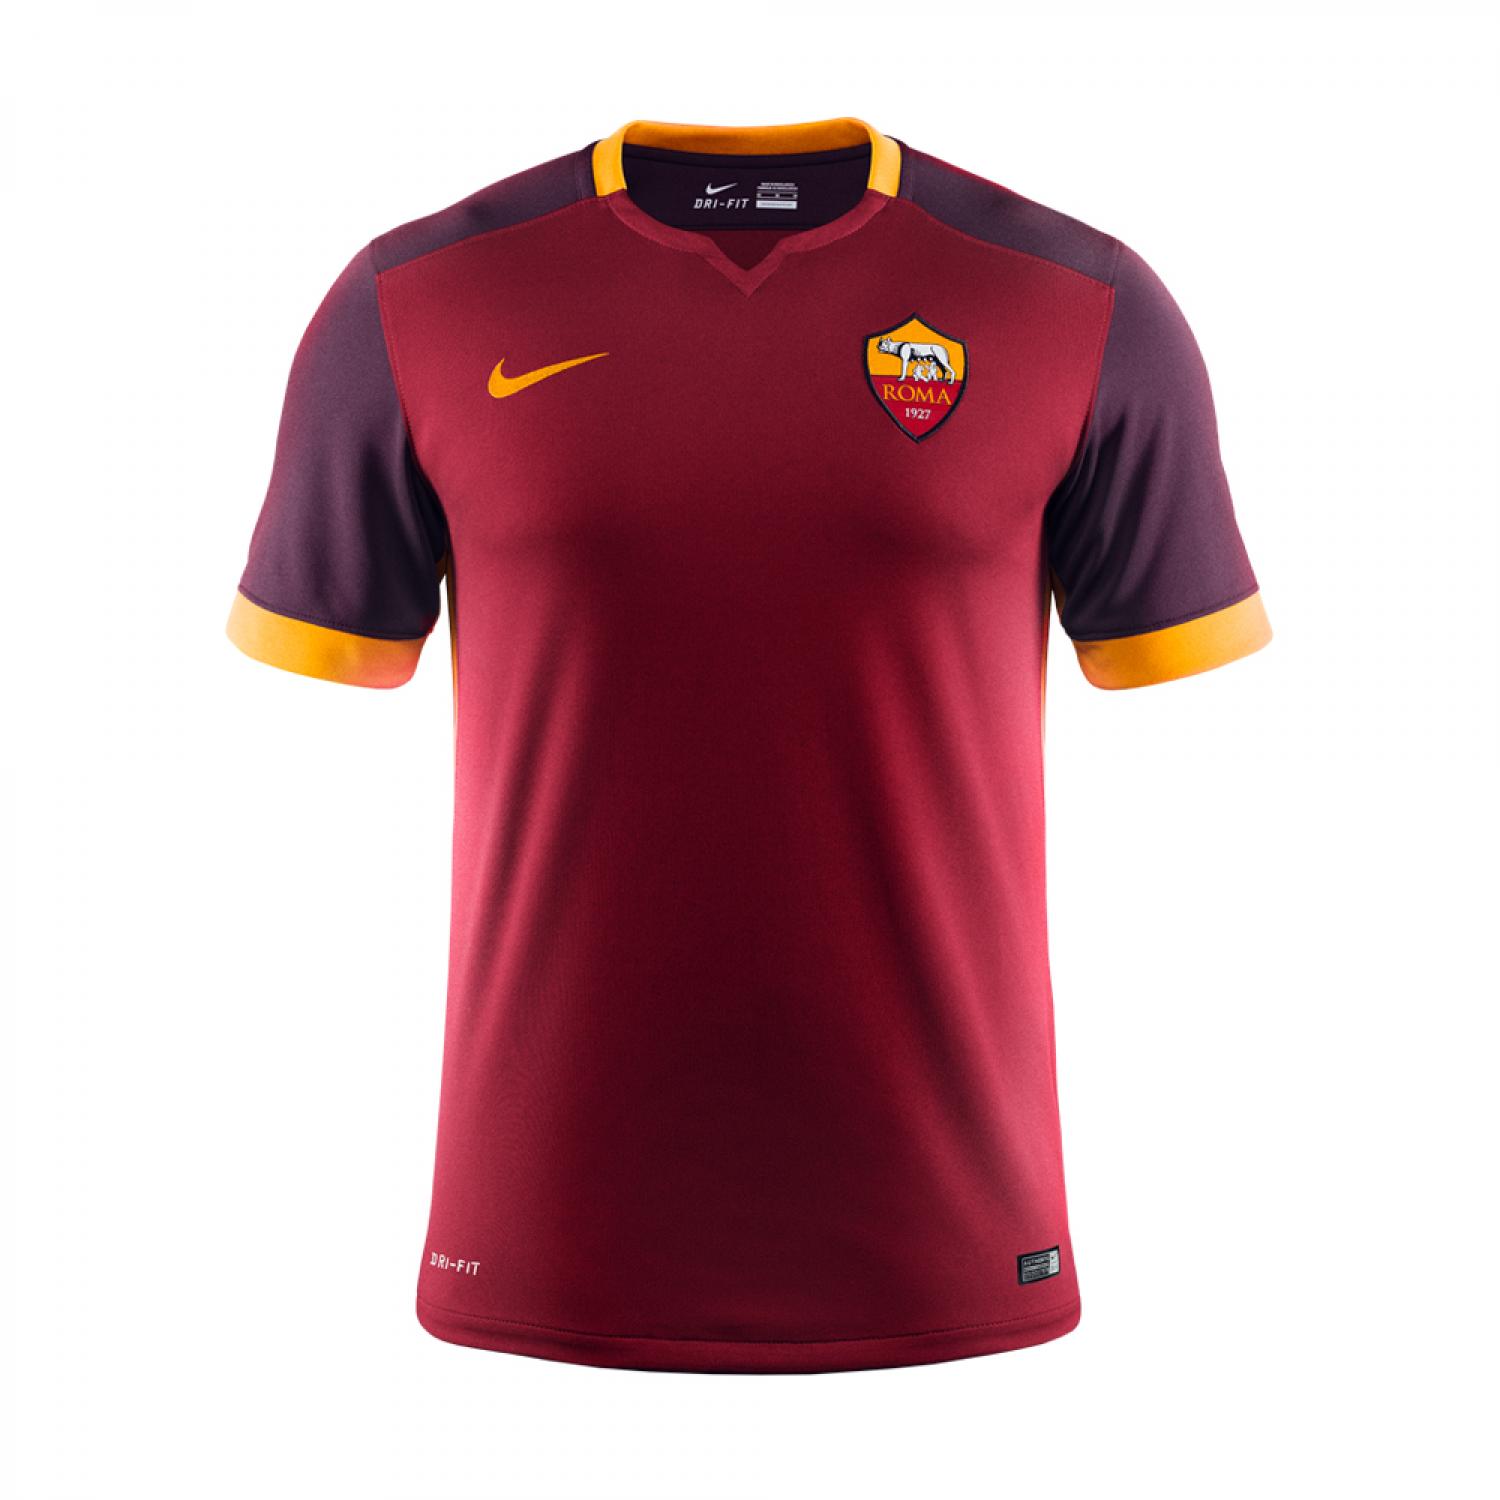 Jersey Roma 2015 2016 | Football Kit News| New Soccer Jerseys| 2020 ...